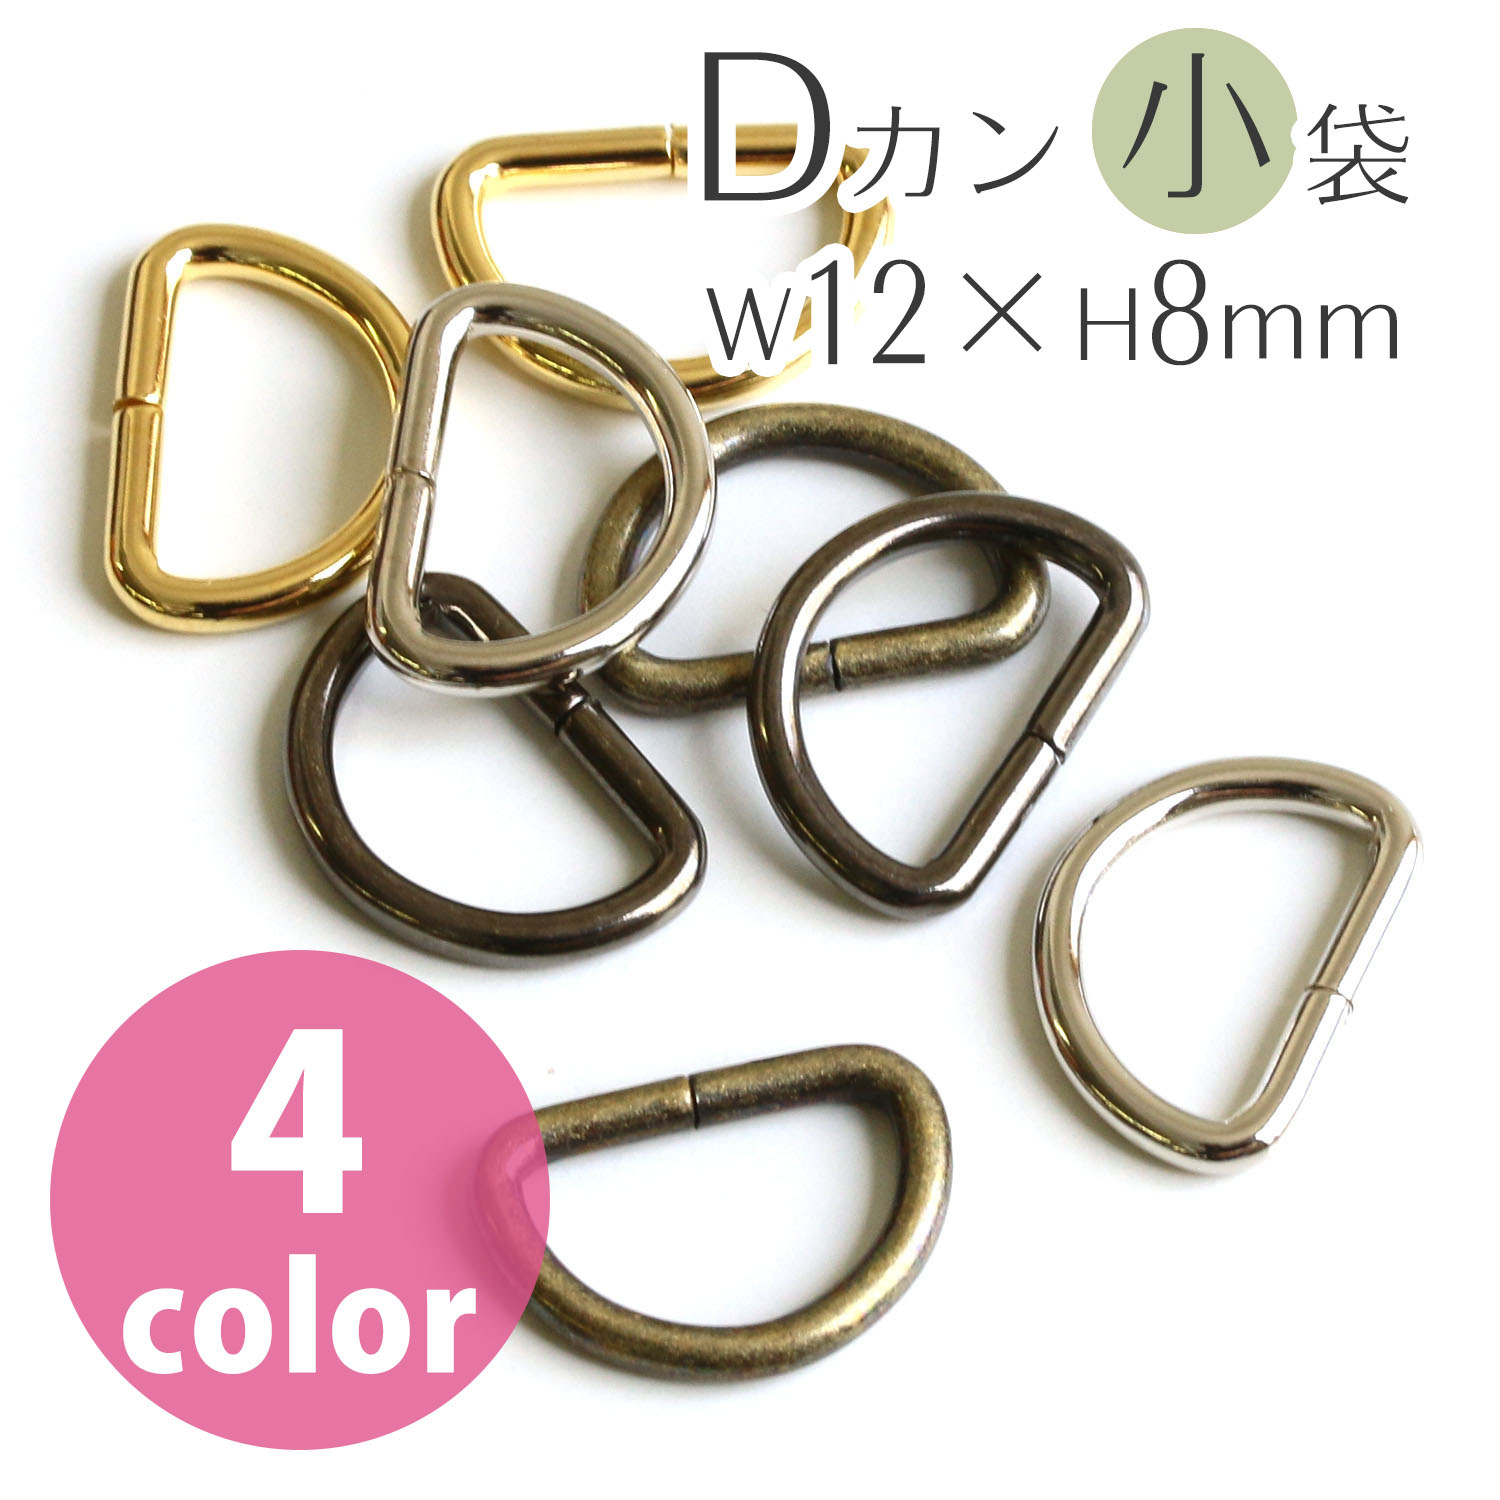 S22 D-Ring  12 x 8mm", diameter 2mm  (bag)